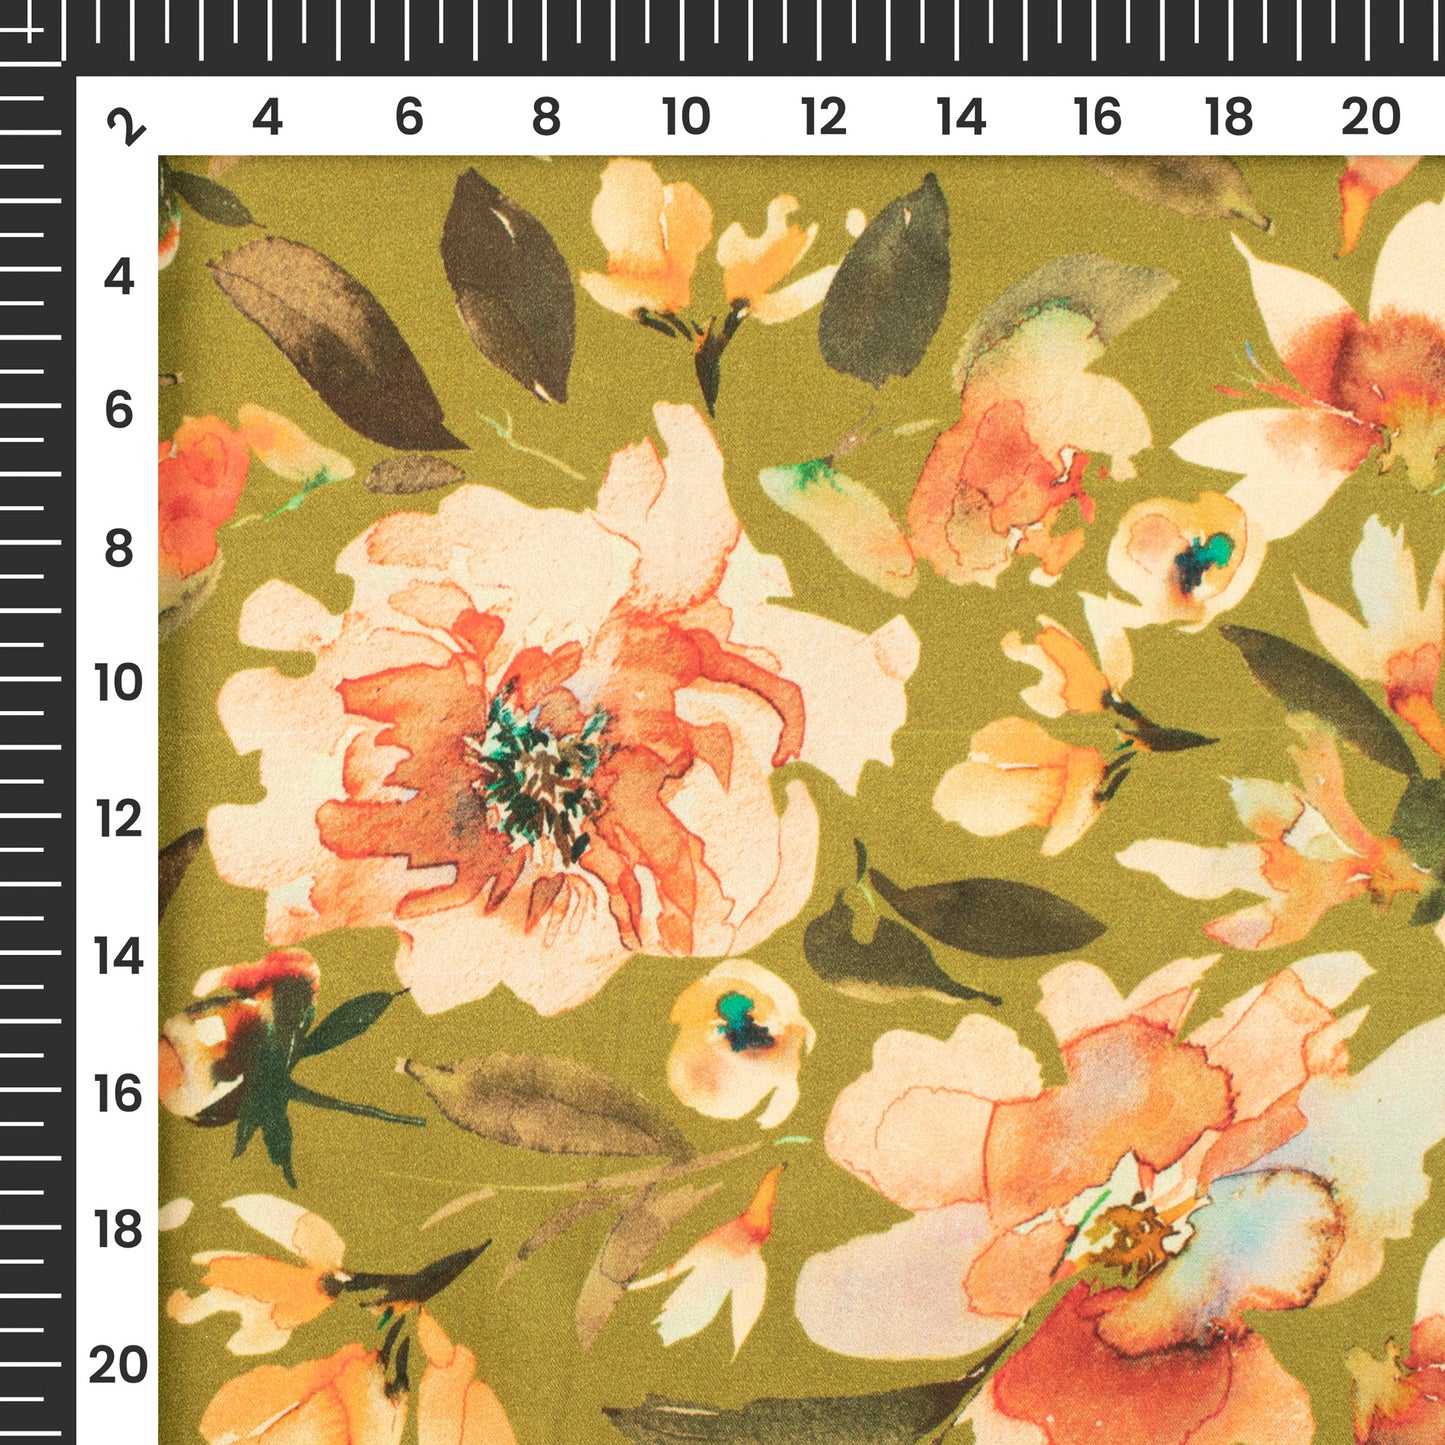 Blossom Floral Digital Print Assami Bemberg Satin Fabric